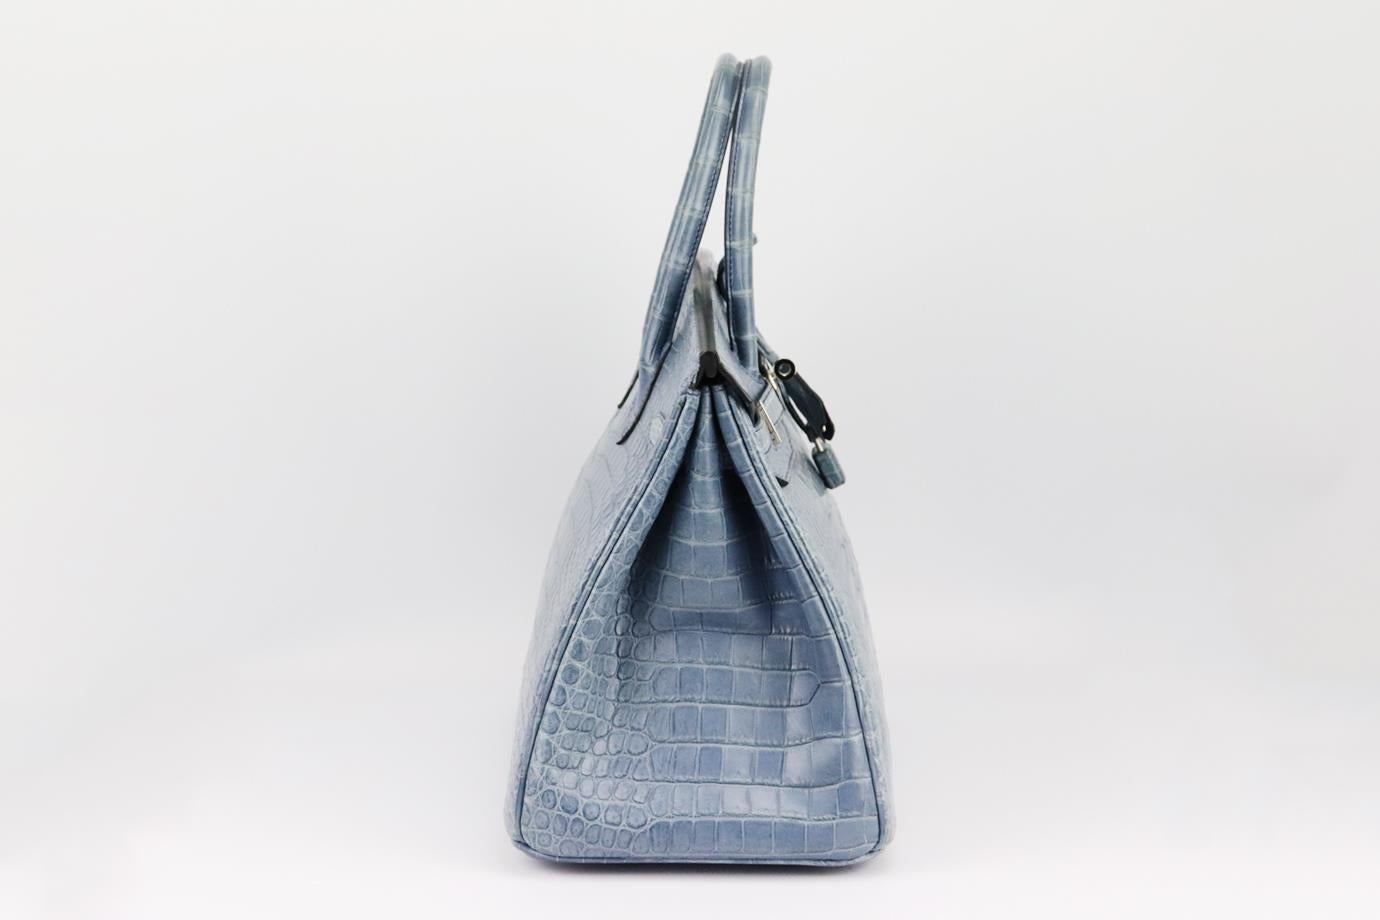 <ul>
<li>Hermès 2010 Birkin 35cm matte Crocodile Porosus leather bag.</li>
<li>Made in France, this beautiful 2010 Hermès ‘Birkin’ handbag has been made from dusty-blue ‘Crocodile Porosus’ exterior in ‘Bleu Jean’ with matching leather interior, this